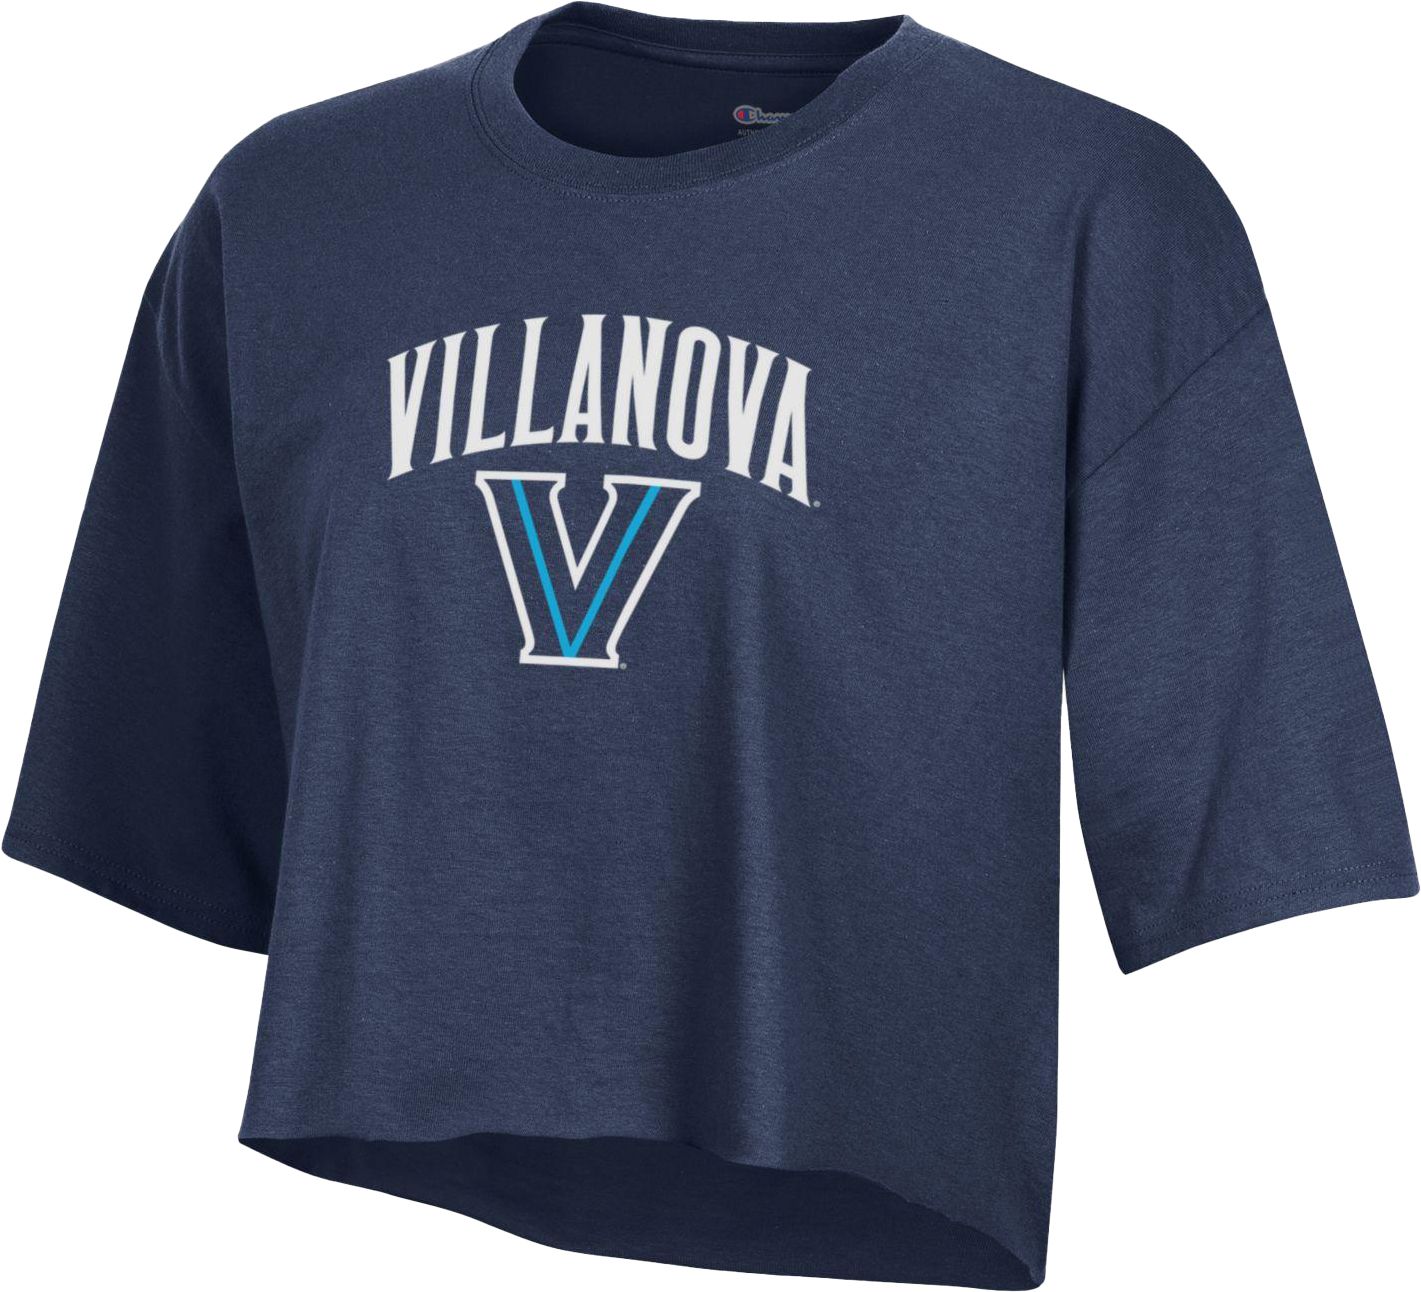 Champion Women's Villanova Wildcats Navy Cropped T-Shirt